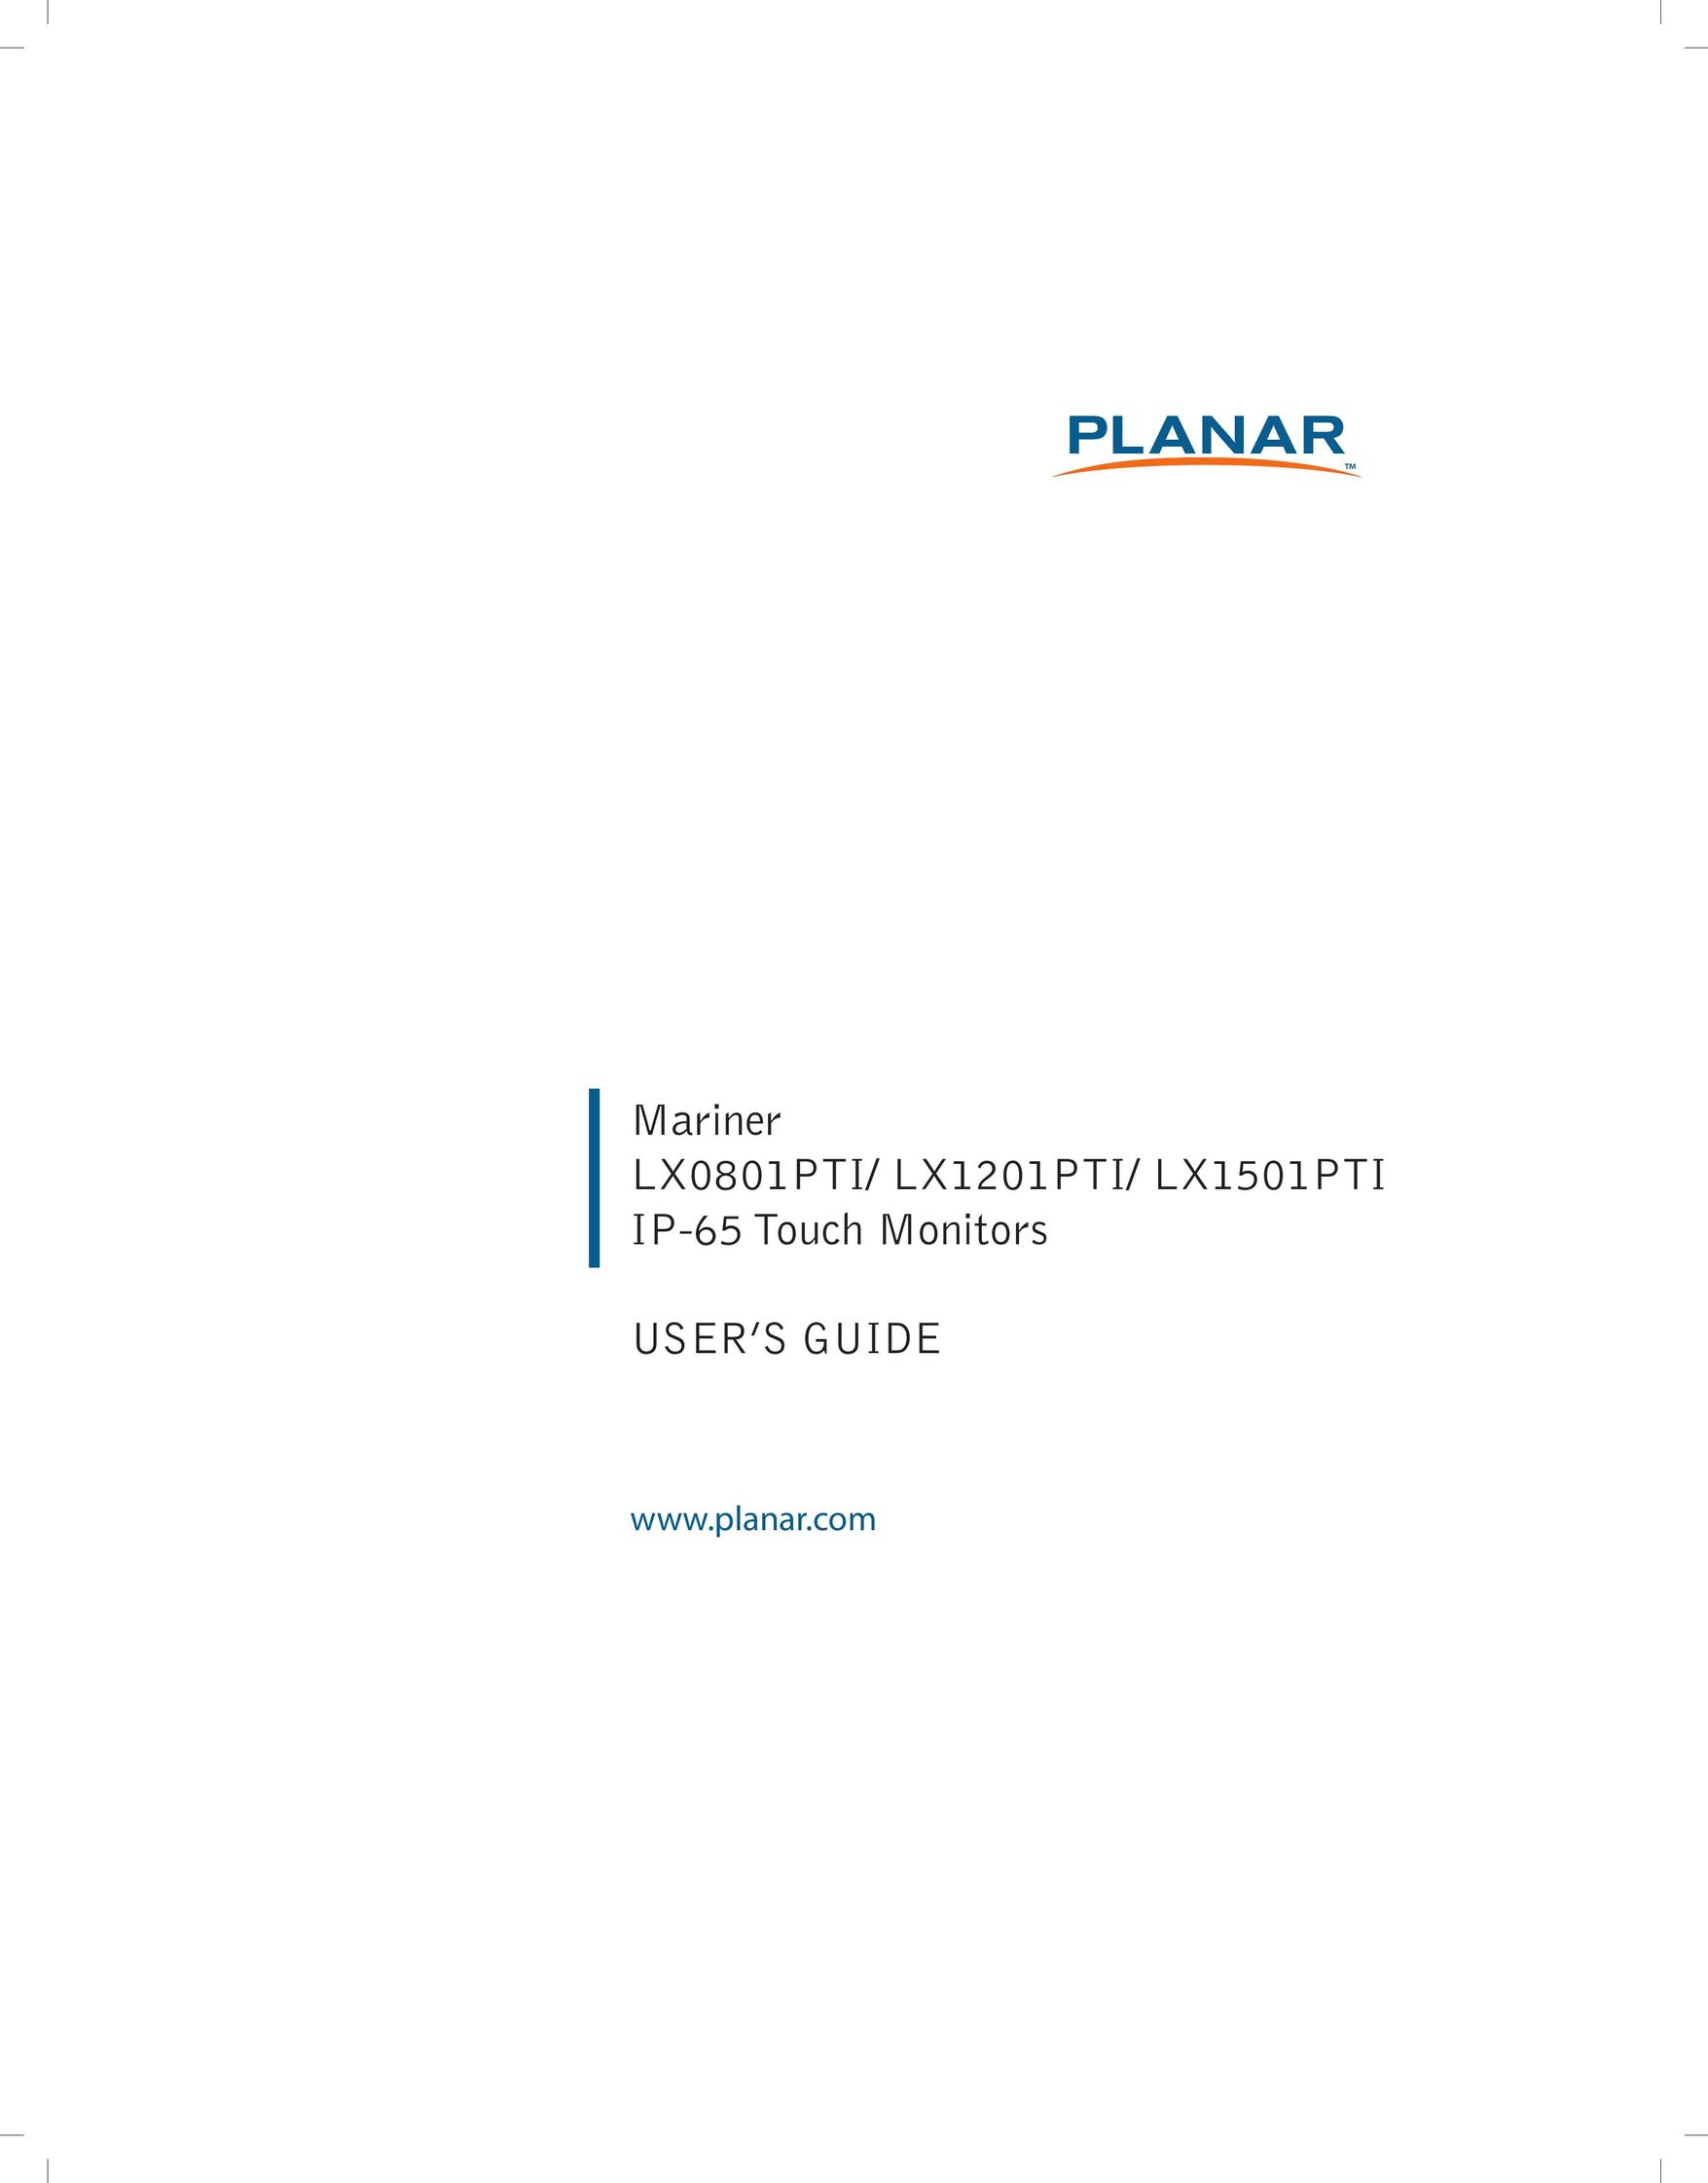 Planar LX1501PTI Car Video System User Manual